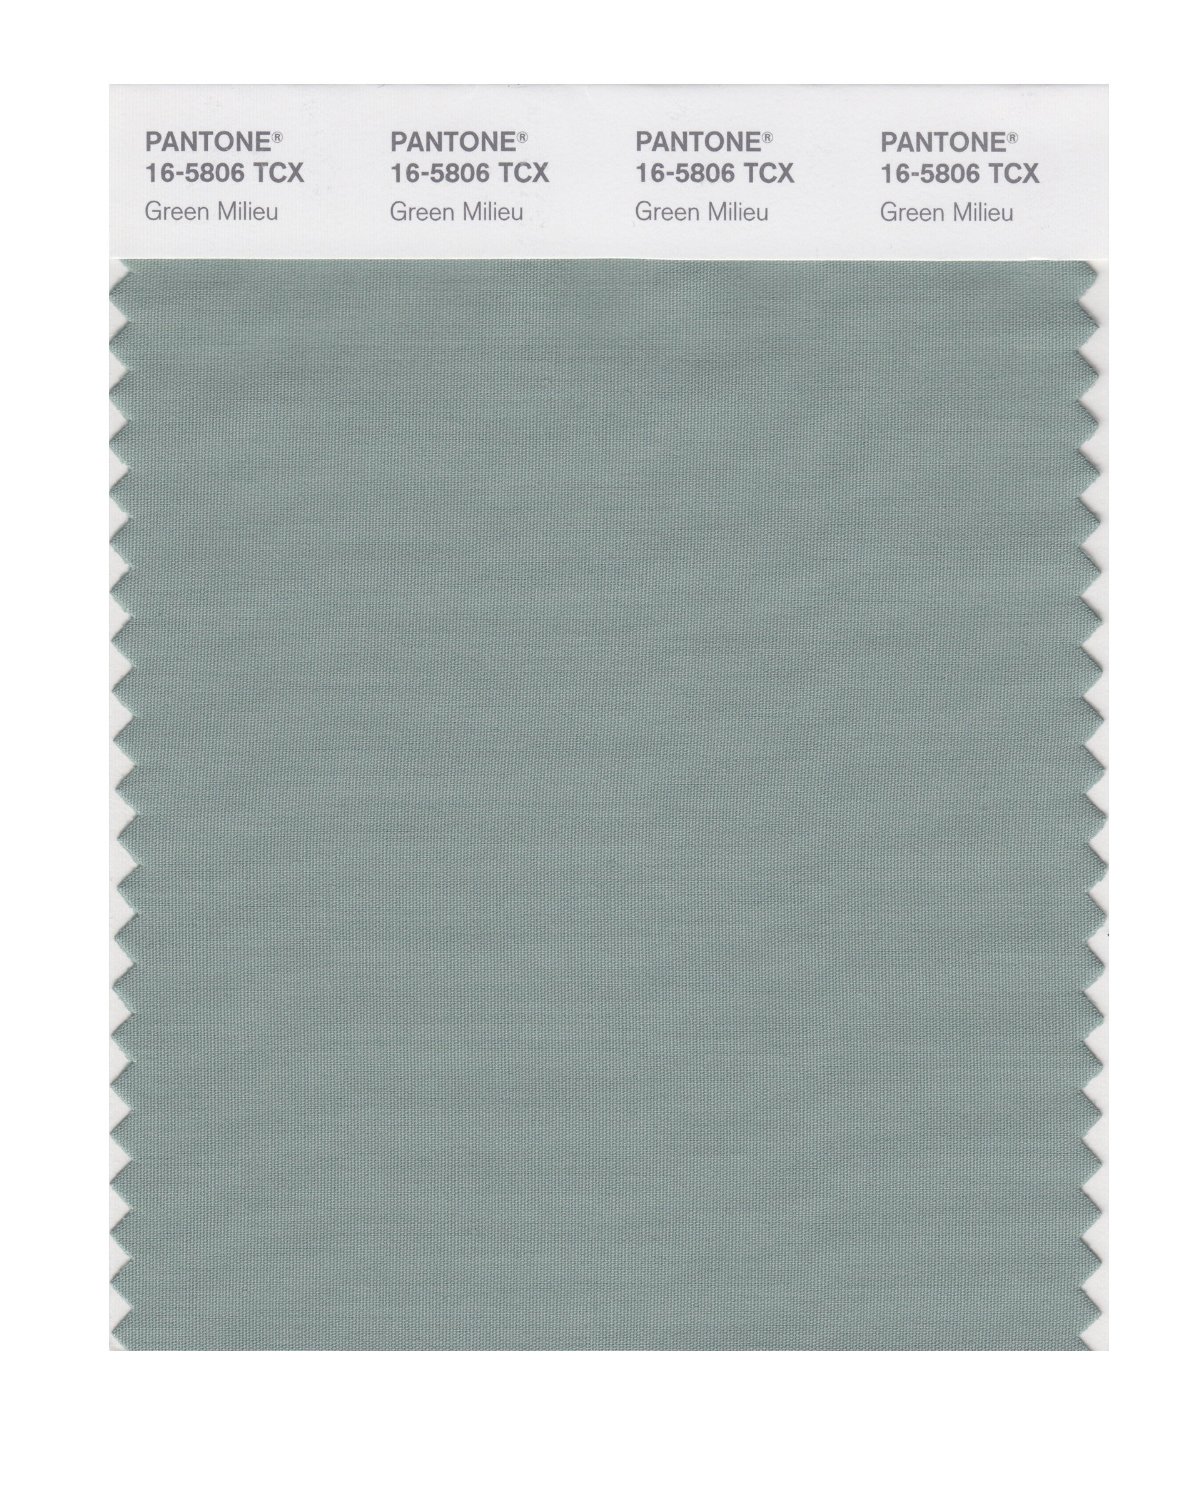 Pantone Cotton Swatch 16-5806 Green Milieu